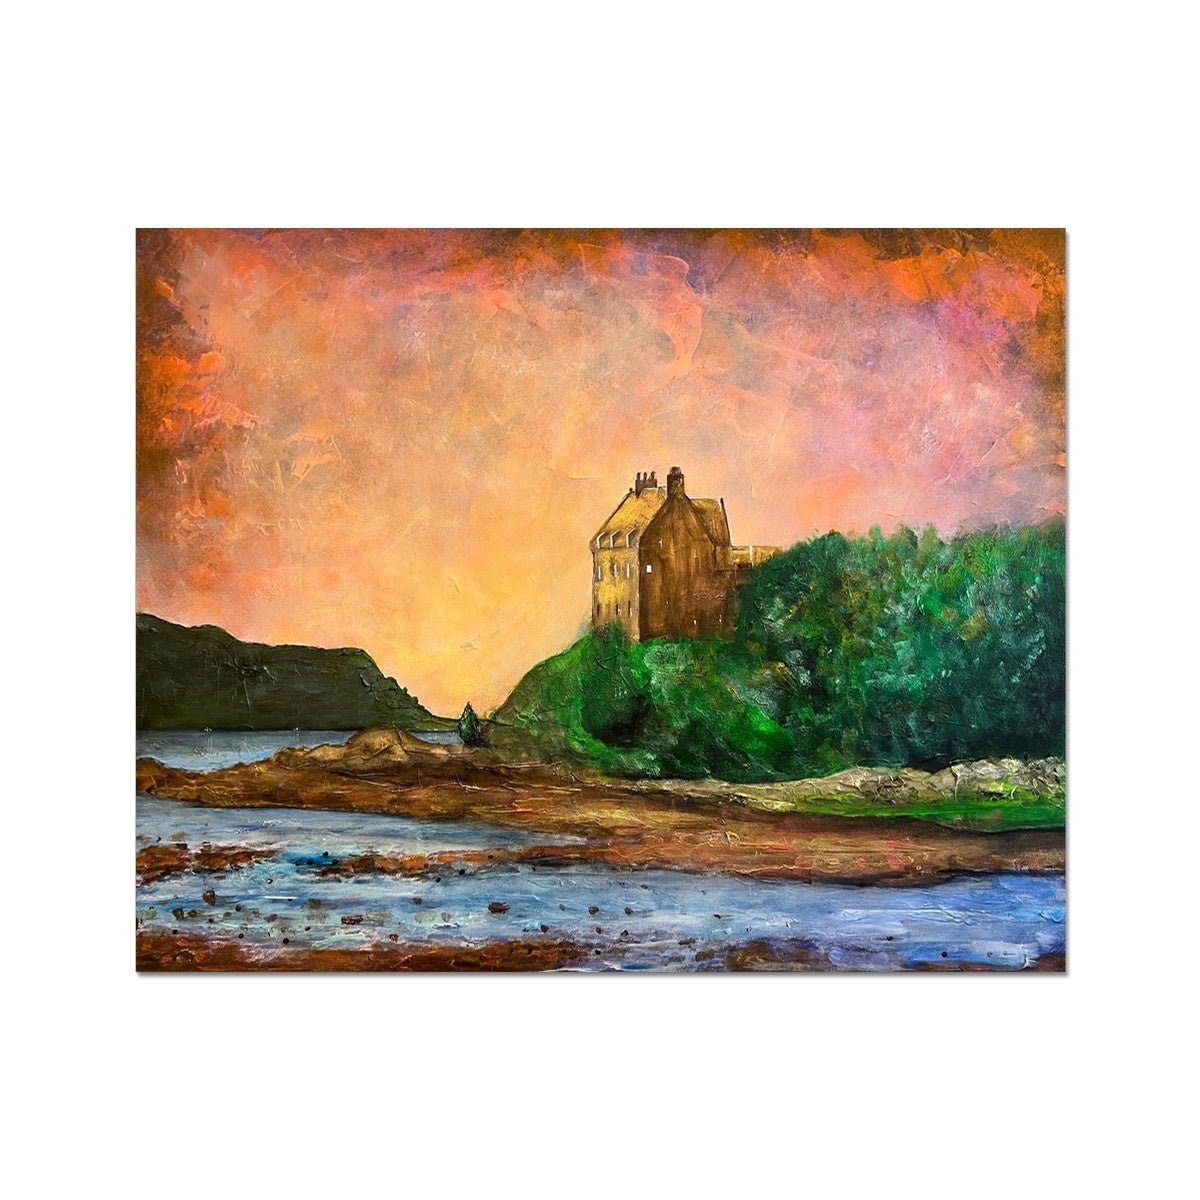 Duntrune Castle Painting | Artist Proof Collector Prints From Scotland-Artist Proof Collector Prints-Scottish Castles Art Gallery-20"x16"-Paintings, Prints, Homeware, Art Gifts From Scotland By Scottish Artist Kevin Hunter